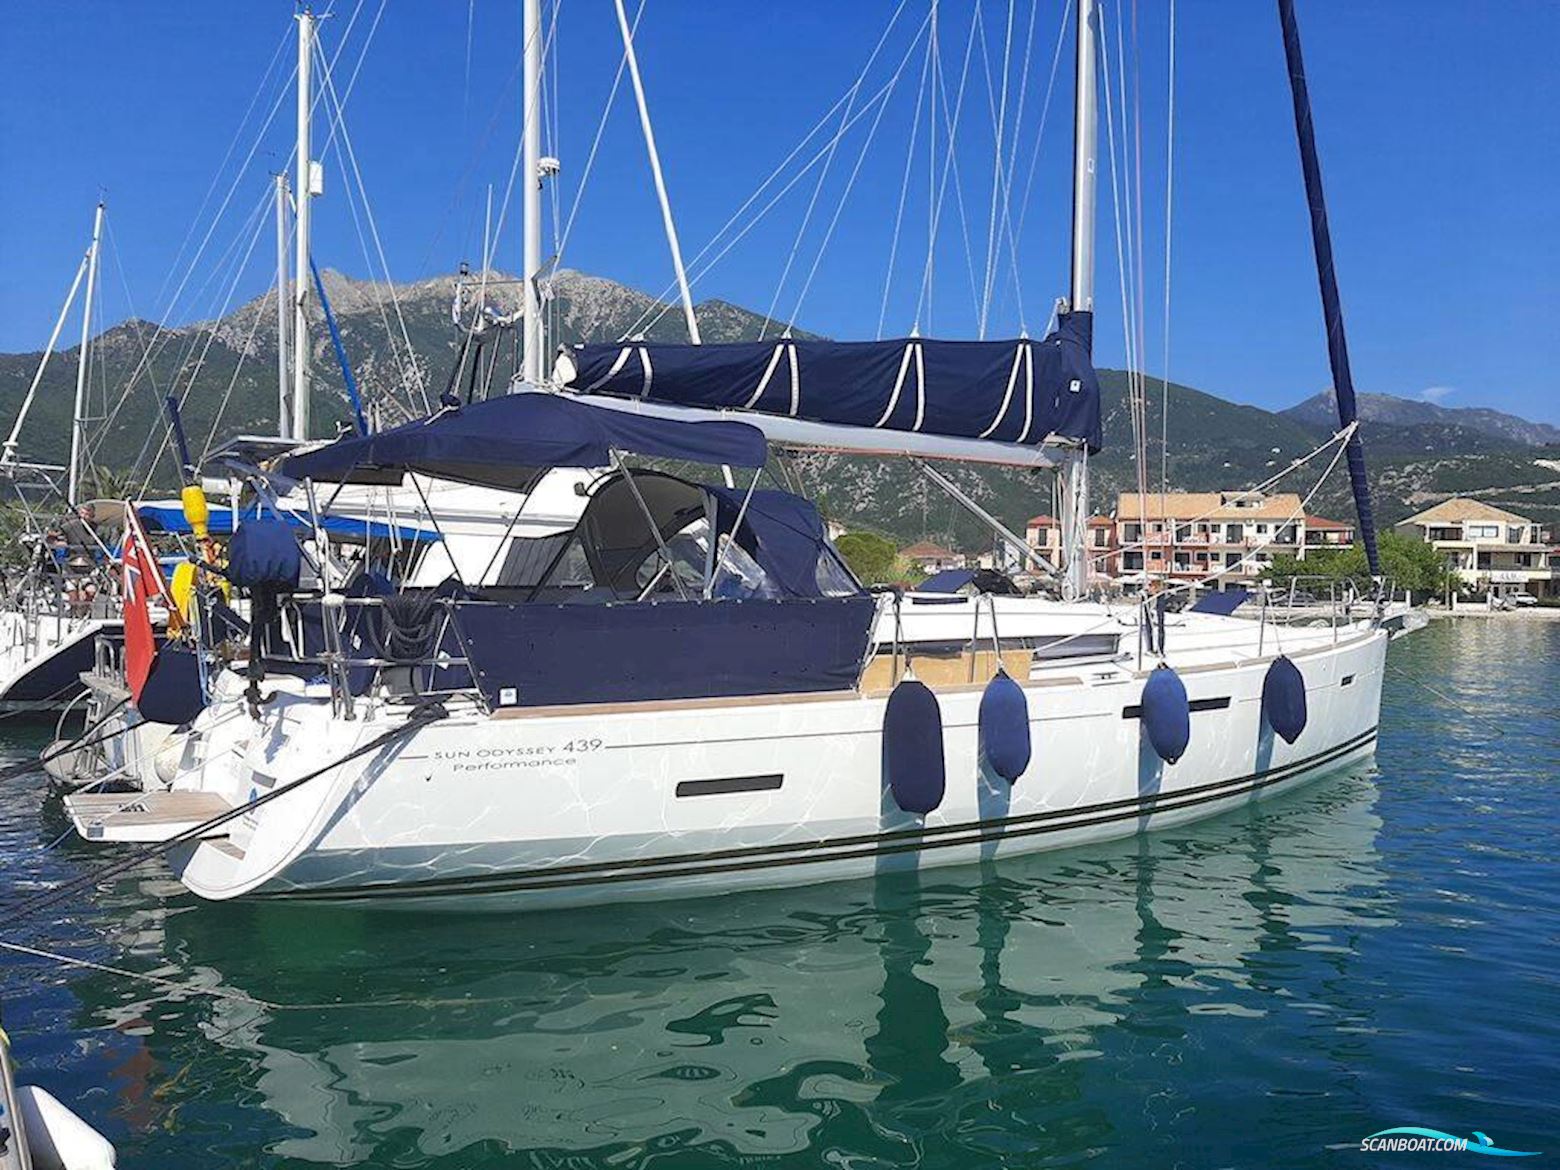 Jeanneau Sun Odyssey 439 performance Segelbåt 2013, med Yanmar motor, Grekland